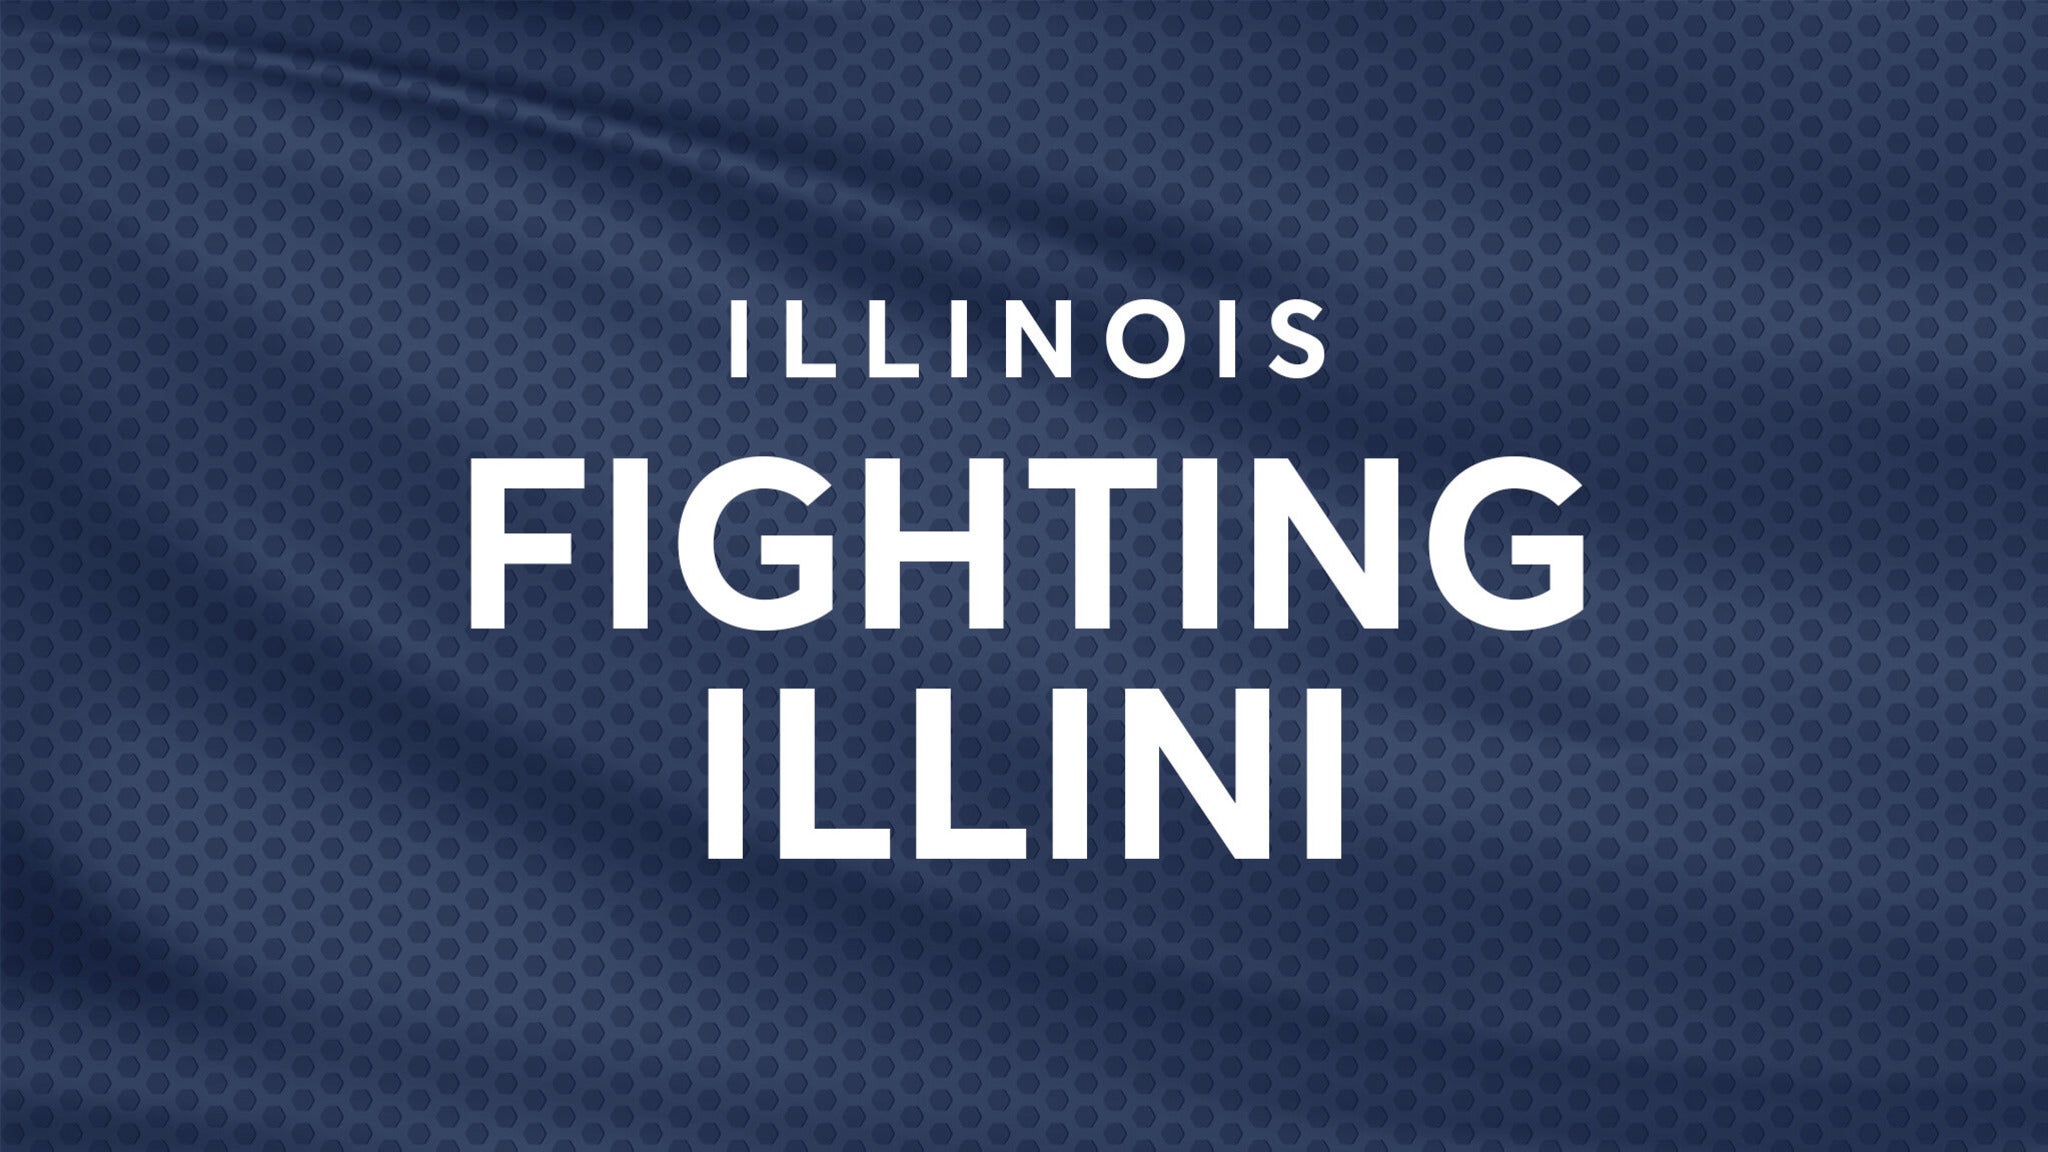 University of Illinois Fighting Illini Football presale information on freepresalepasswords.com